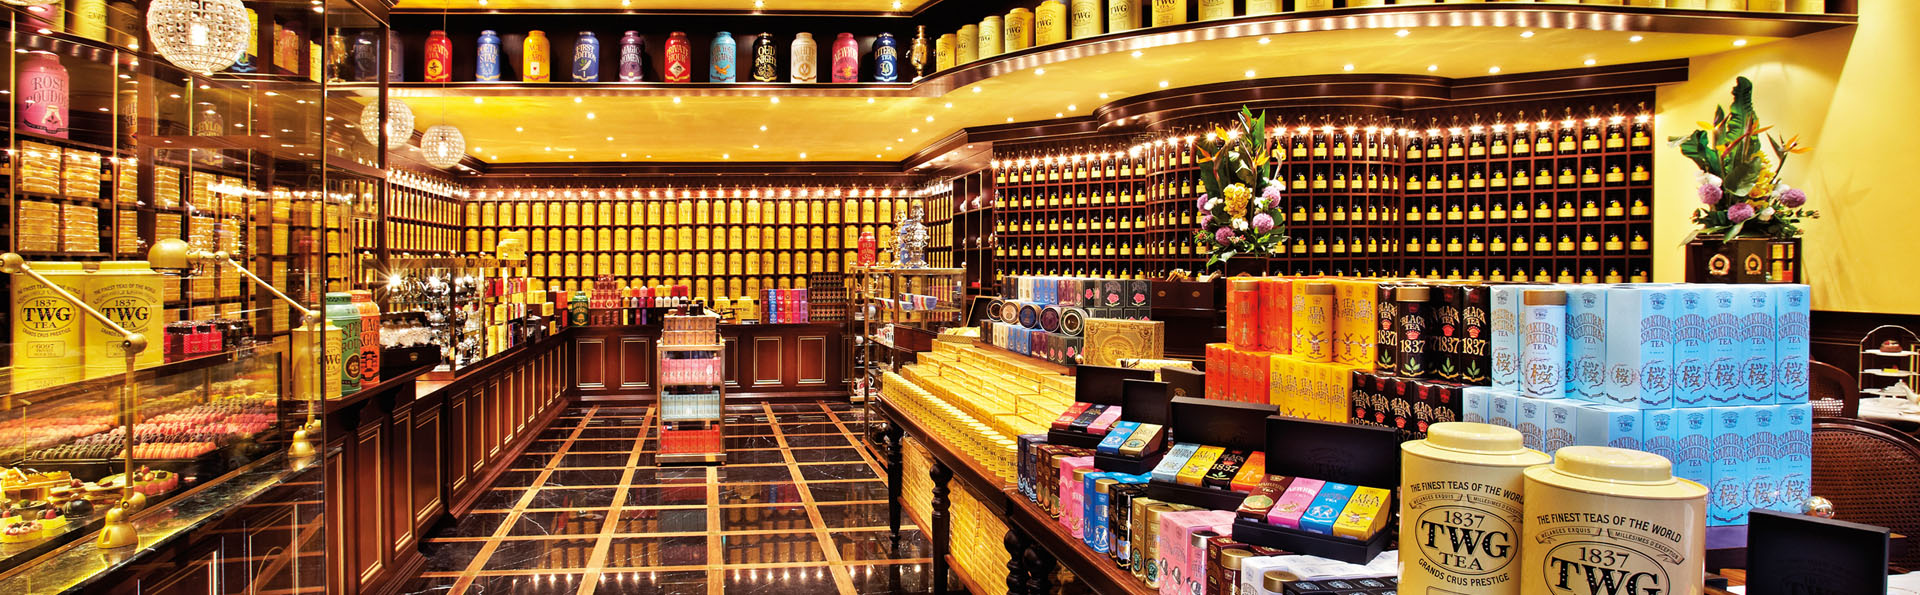 TWG Tea Salon and Boutique | Singapore Restaurants | Marina Bay Sands